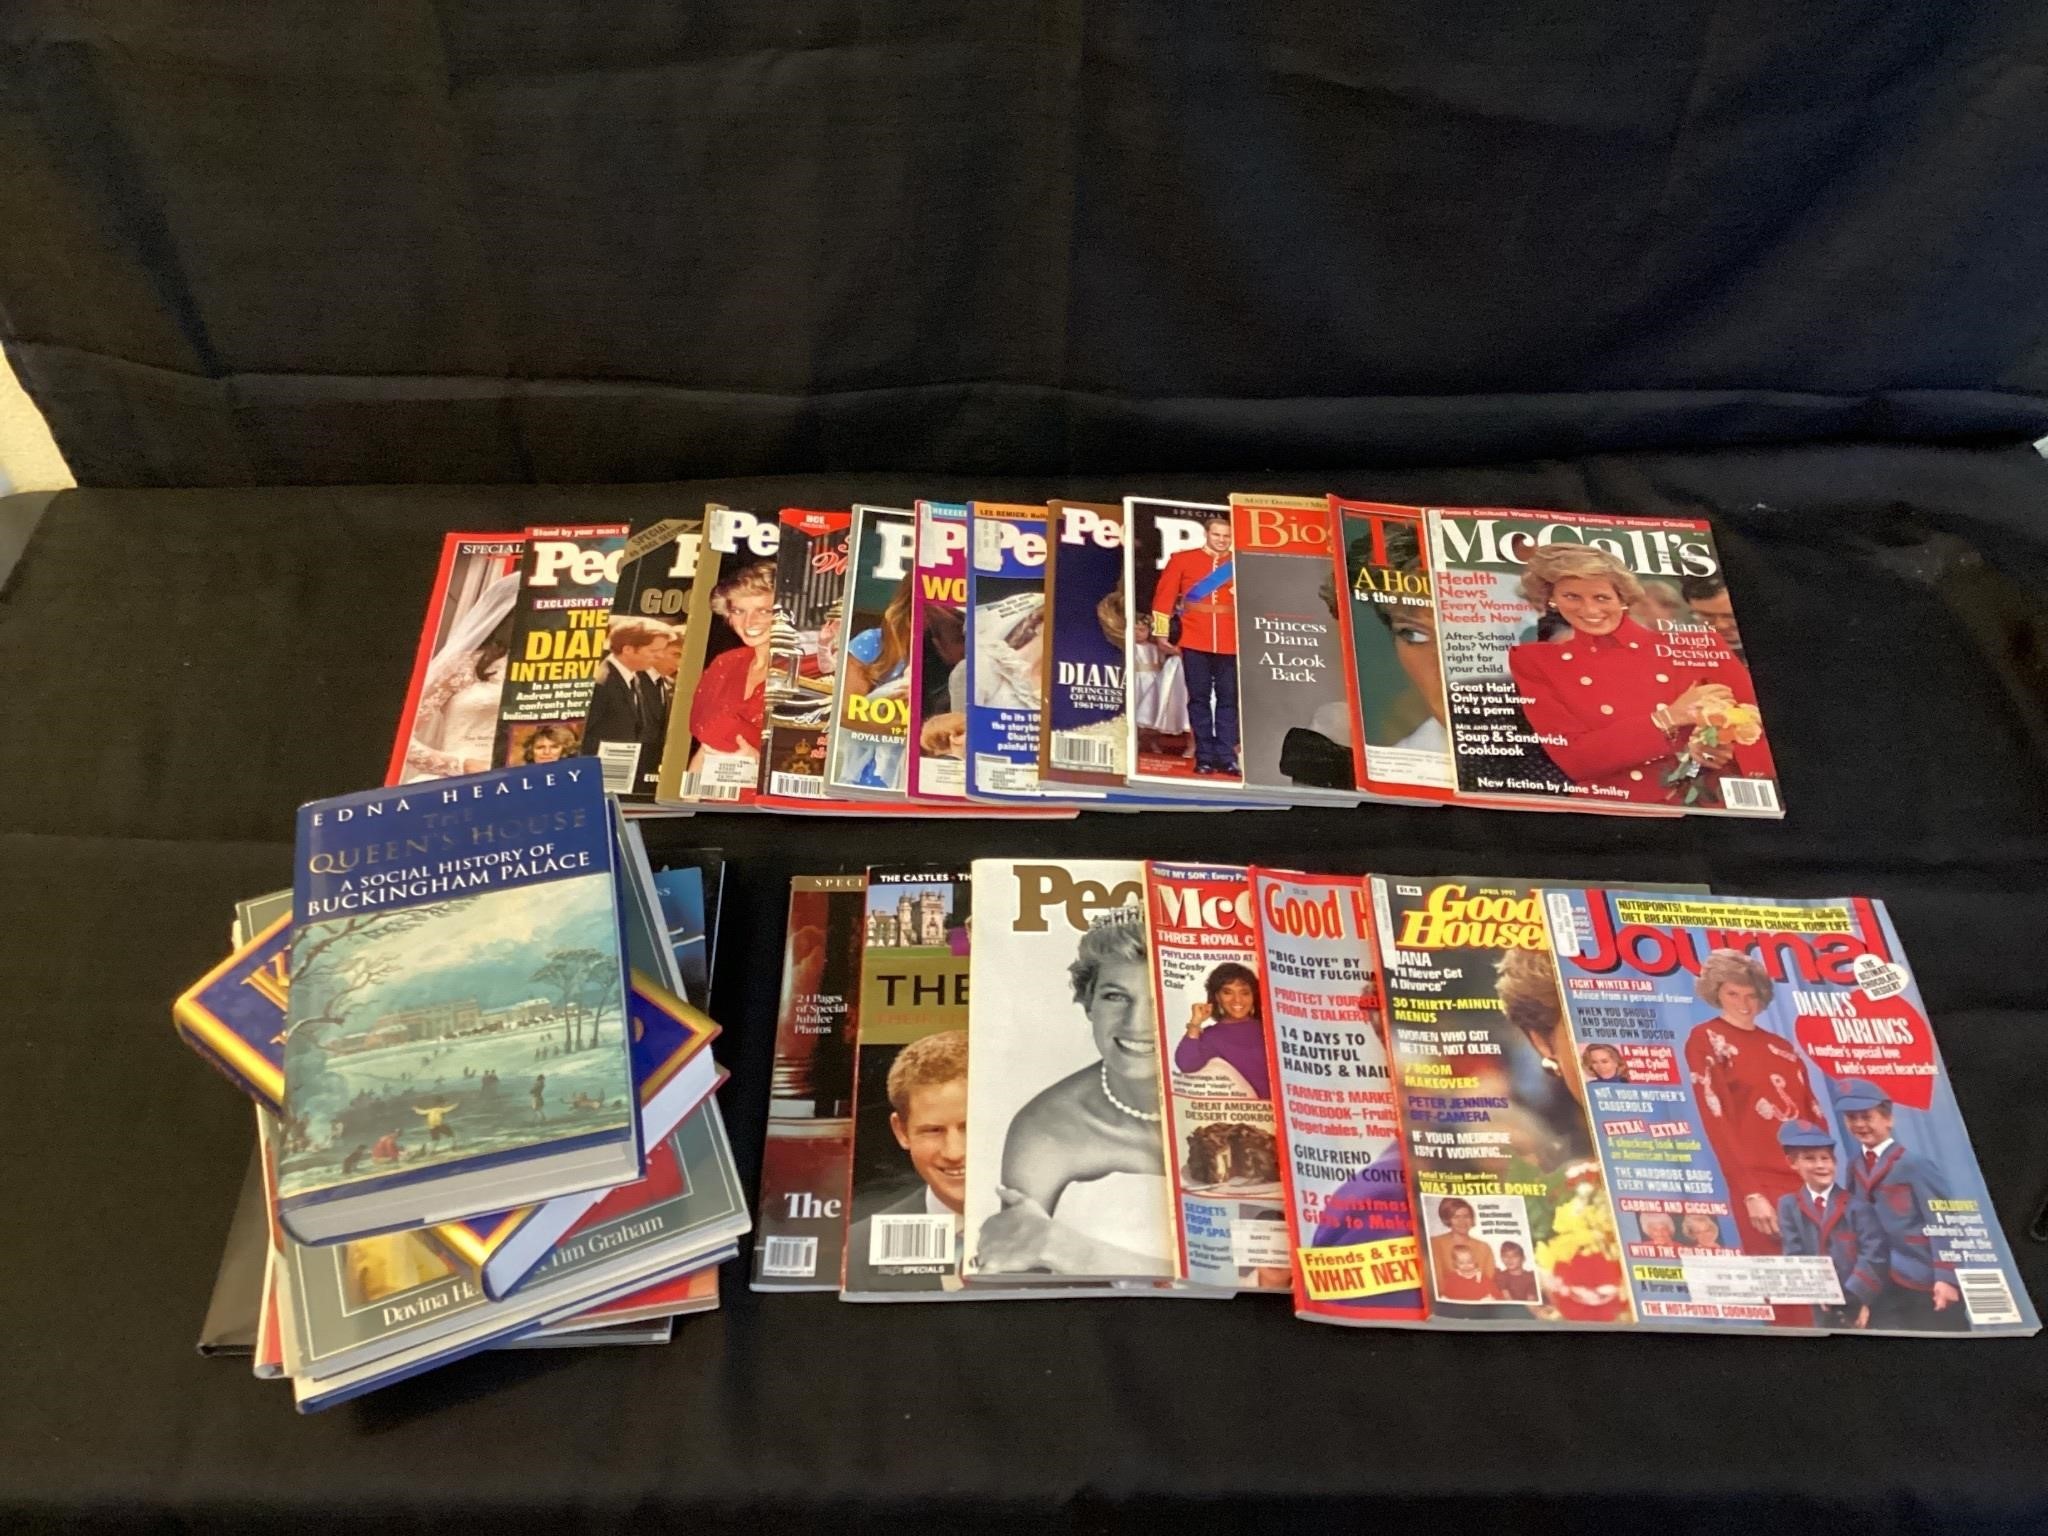 Royalty magazines and books- Princess Diana